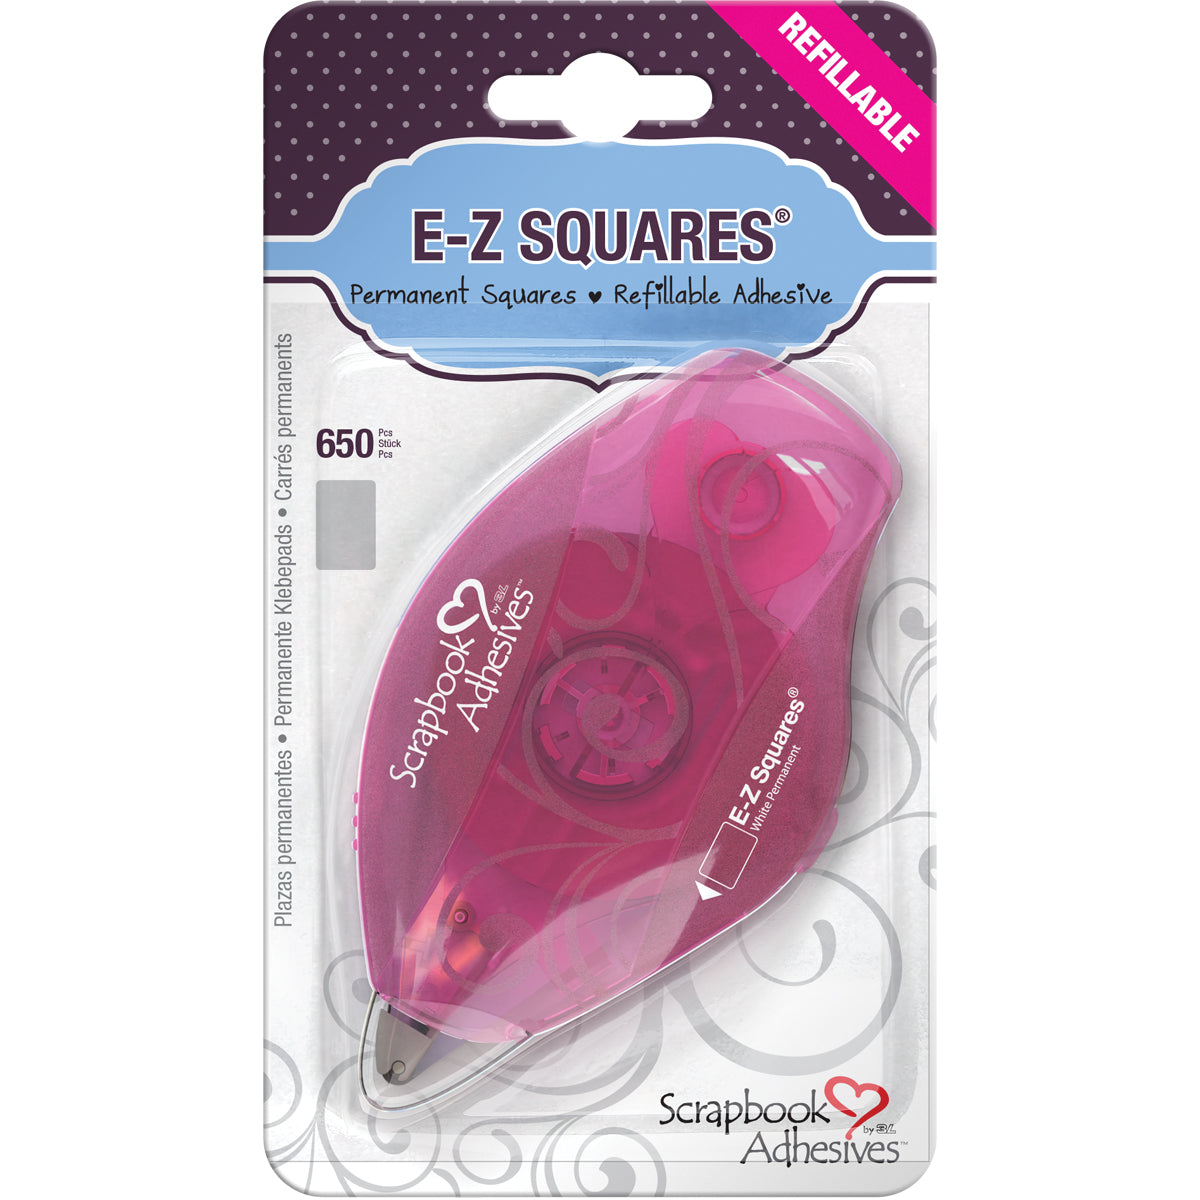 E-Z Squares Refillable Dispenser